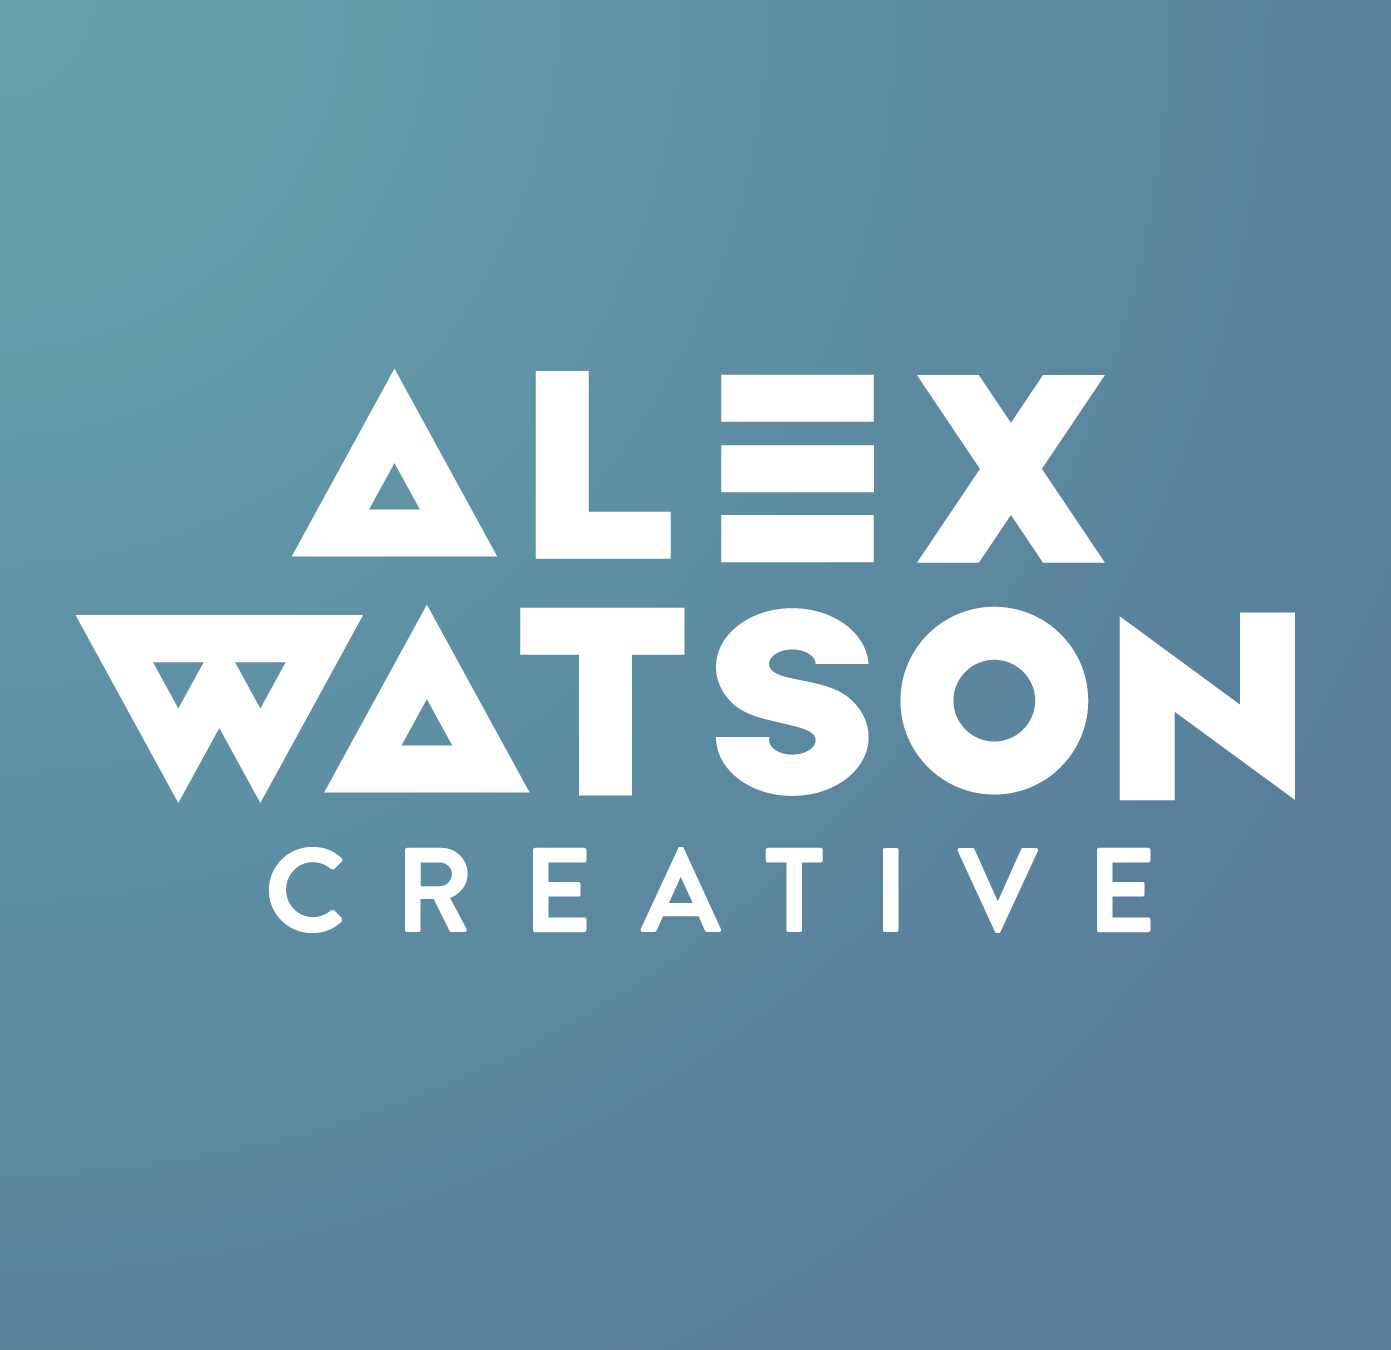 ALEX WATSON CREATIVE